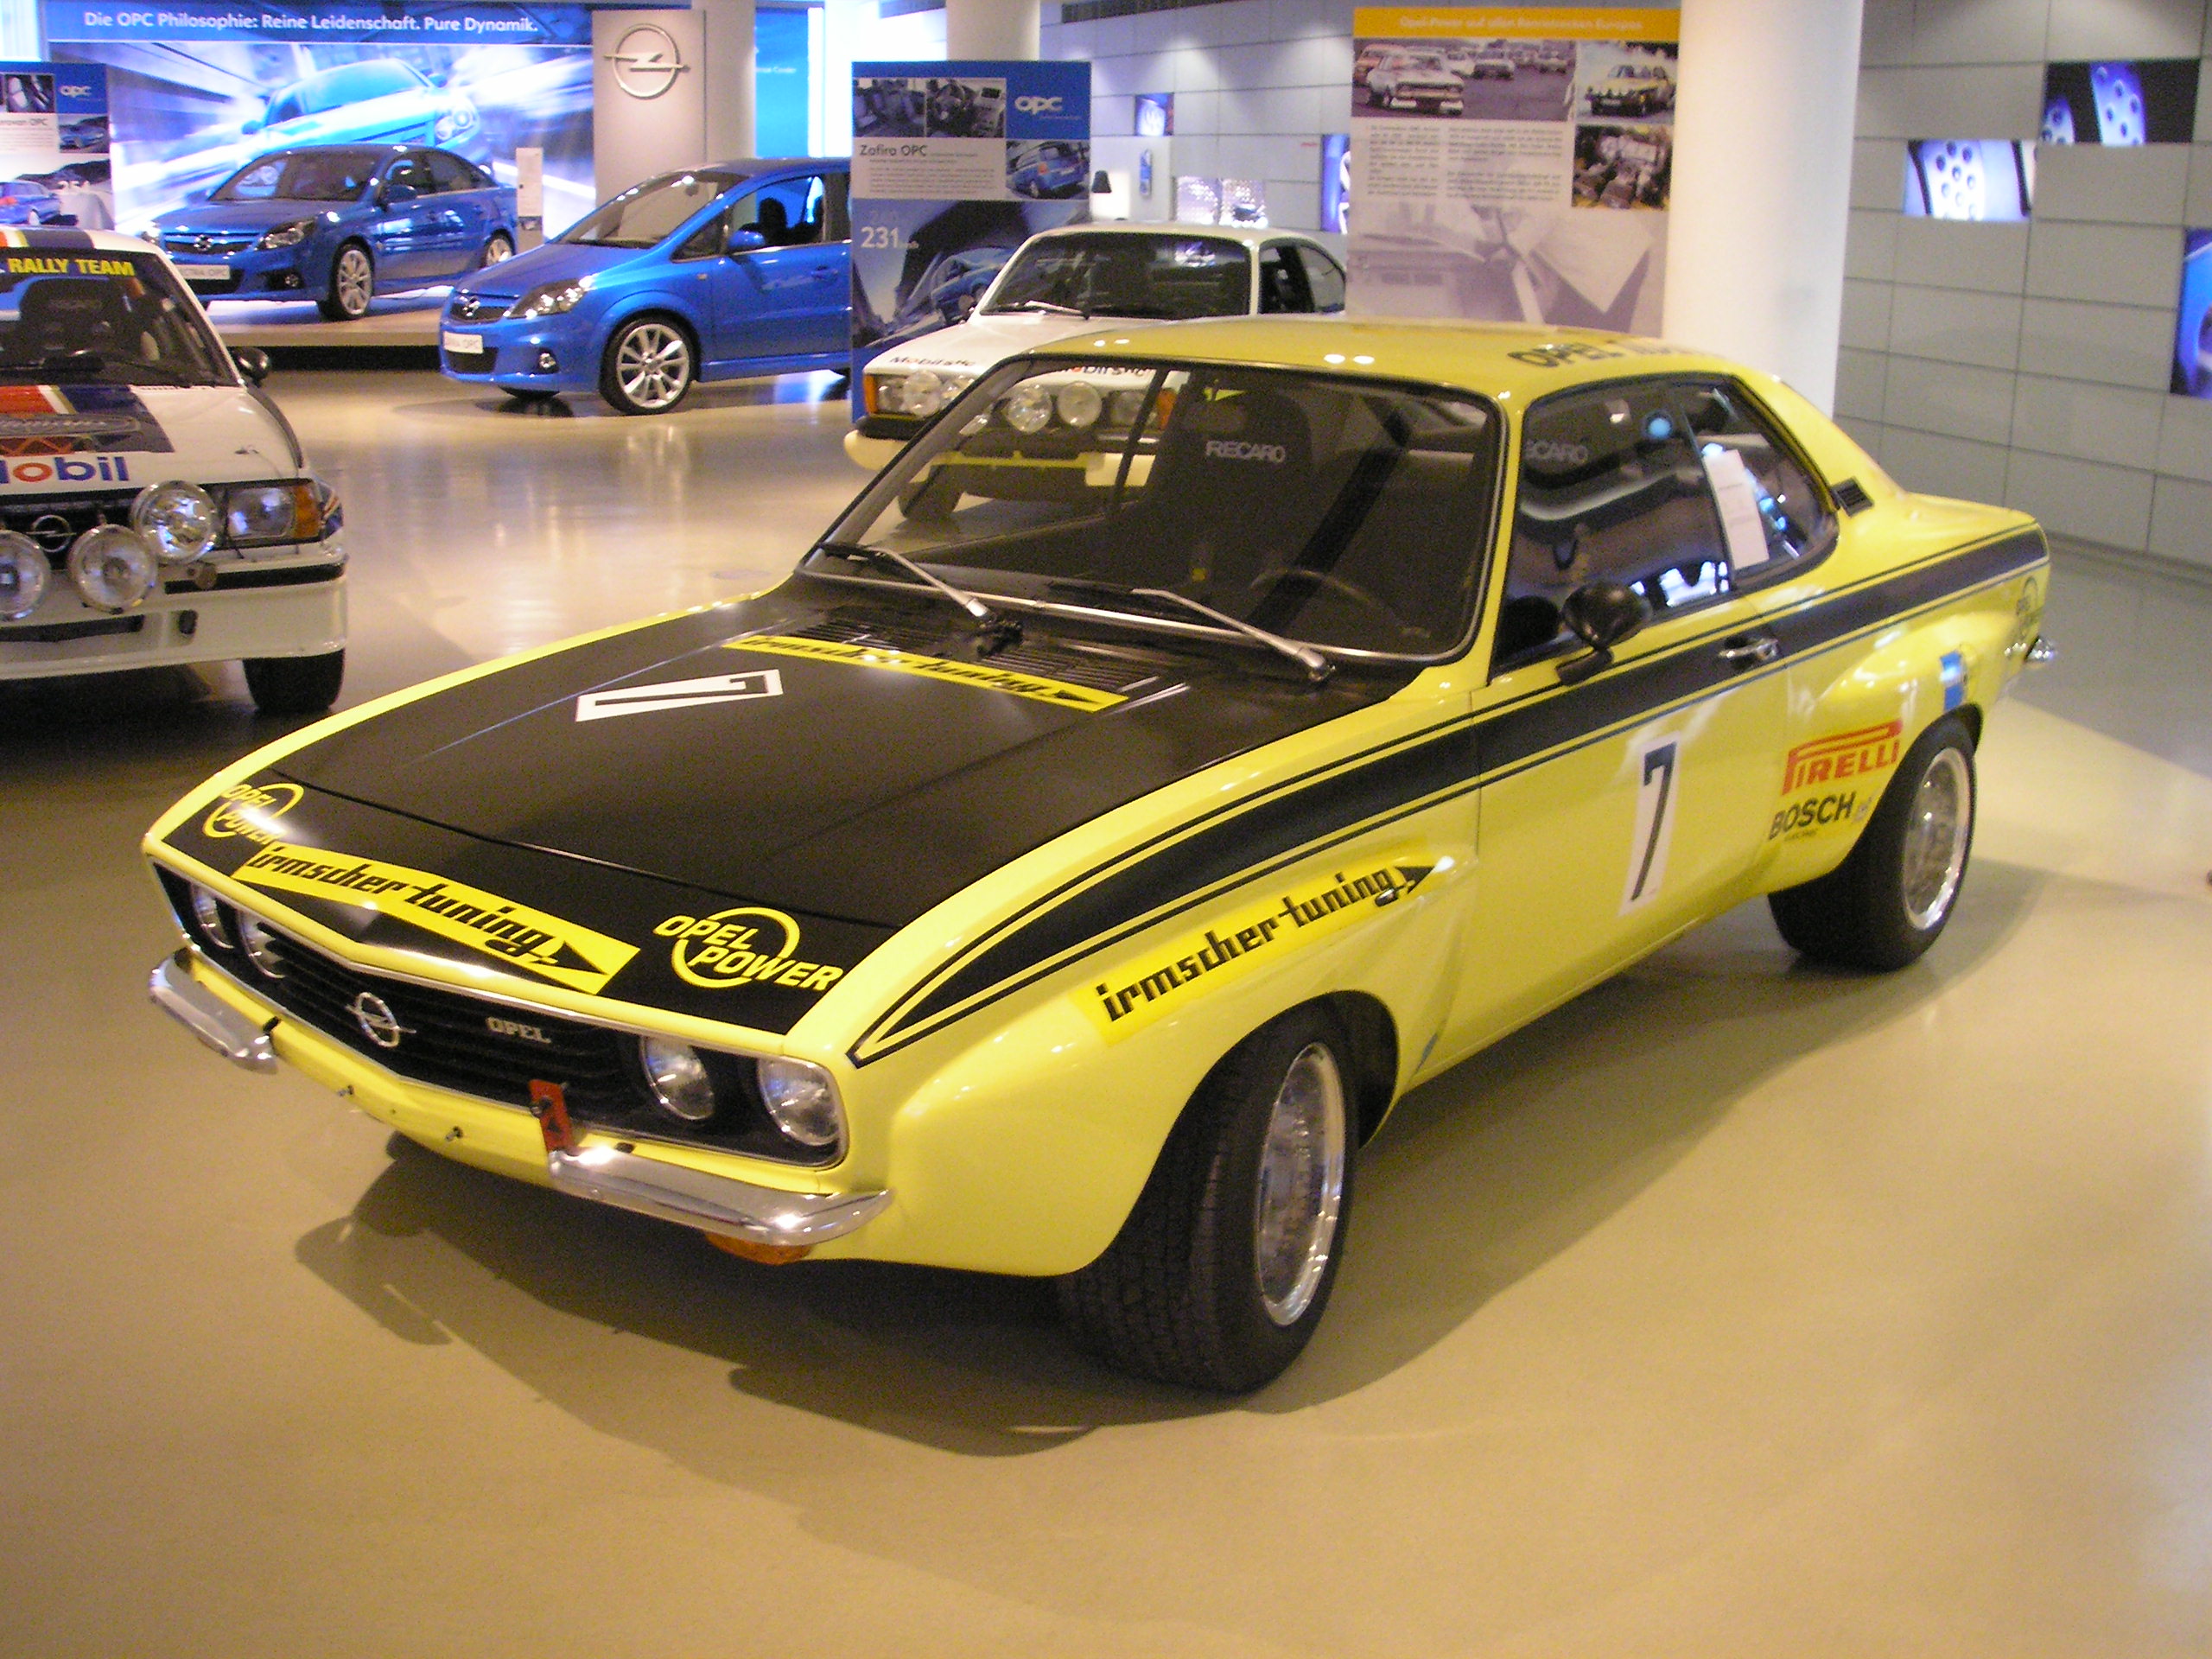 Opel Manta 20 S